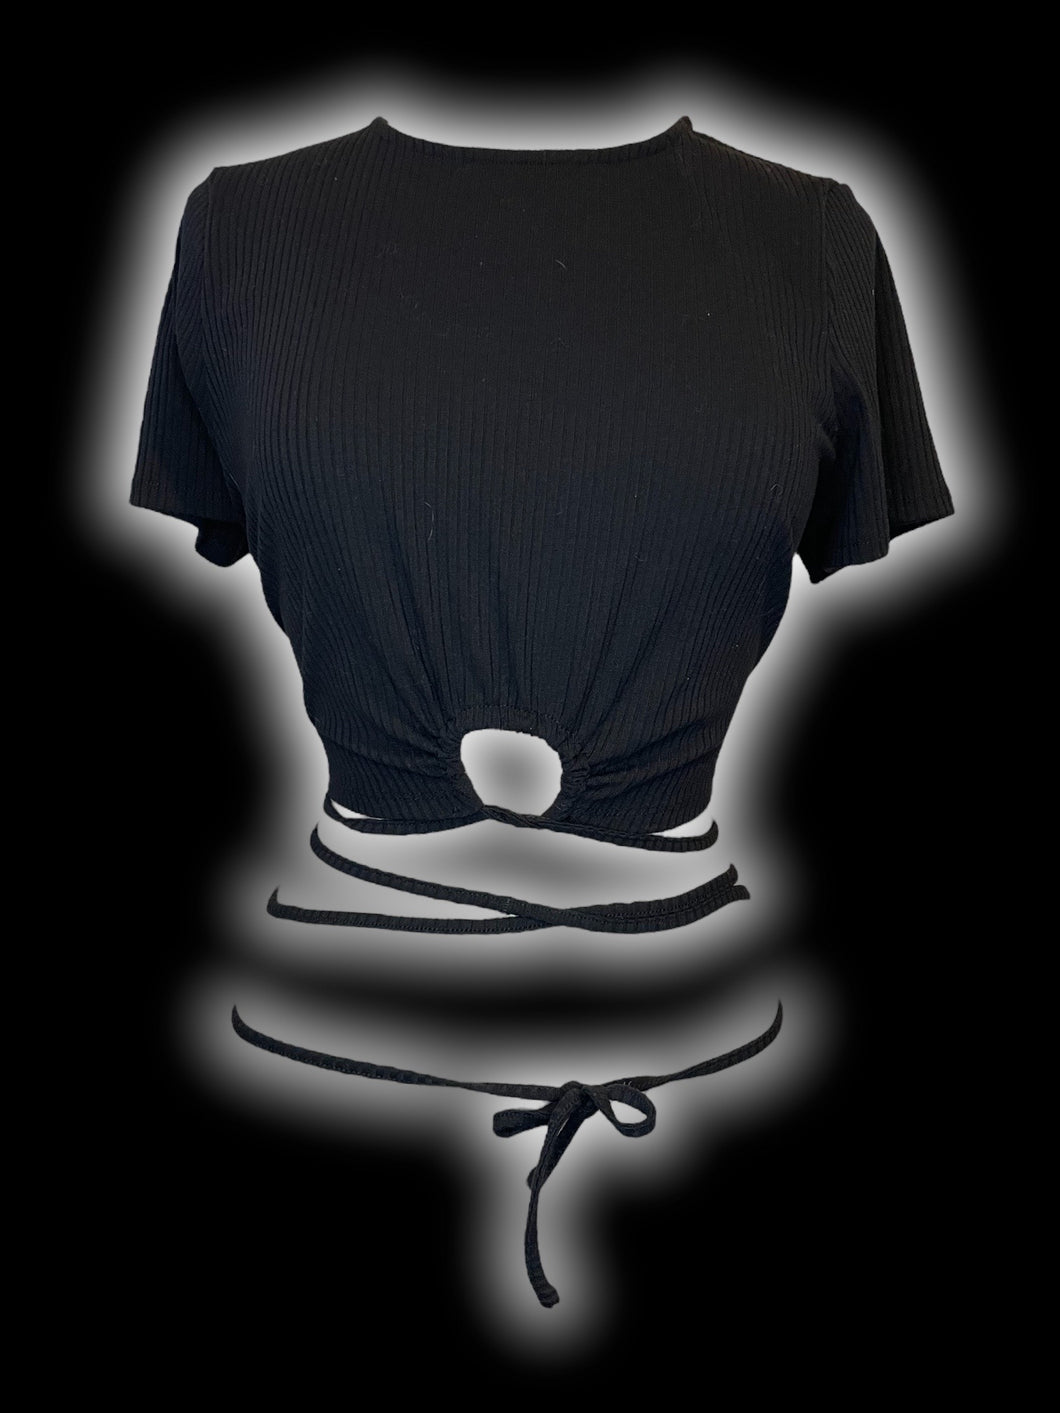 XL Black rib knit short sleeve round neckline crop top w/ tie keyhole wrap detail